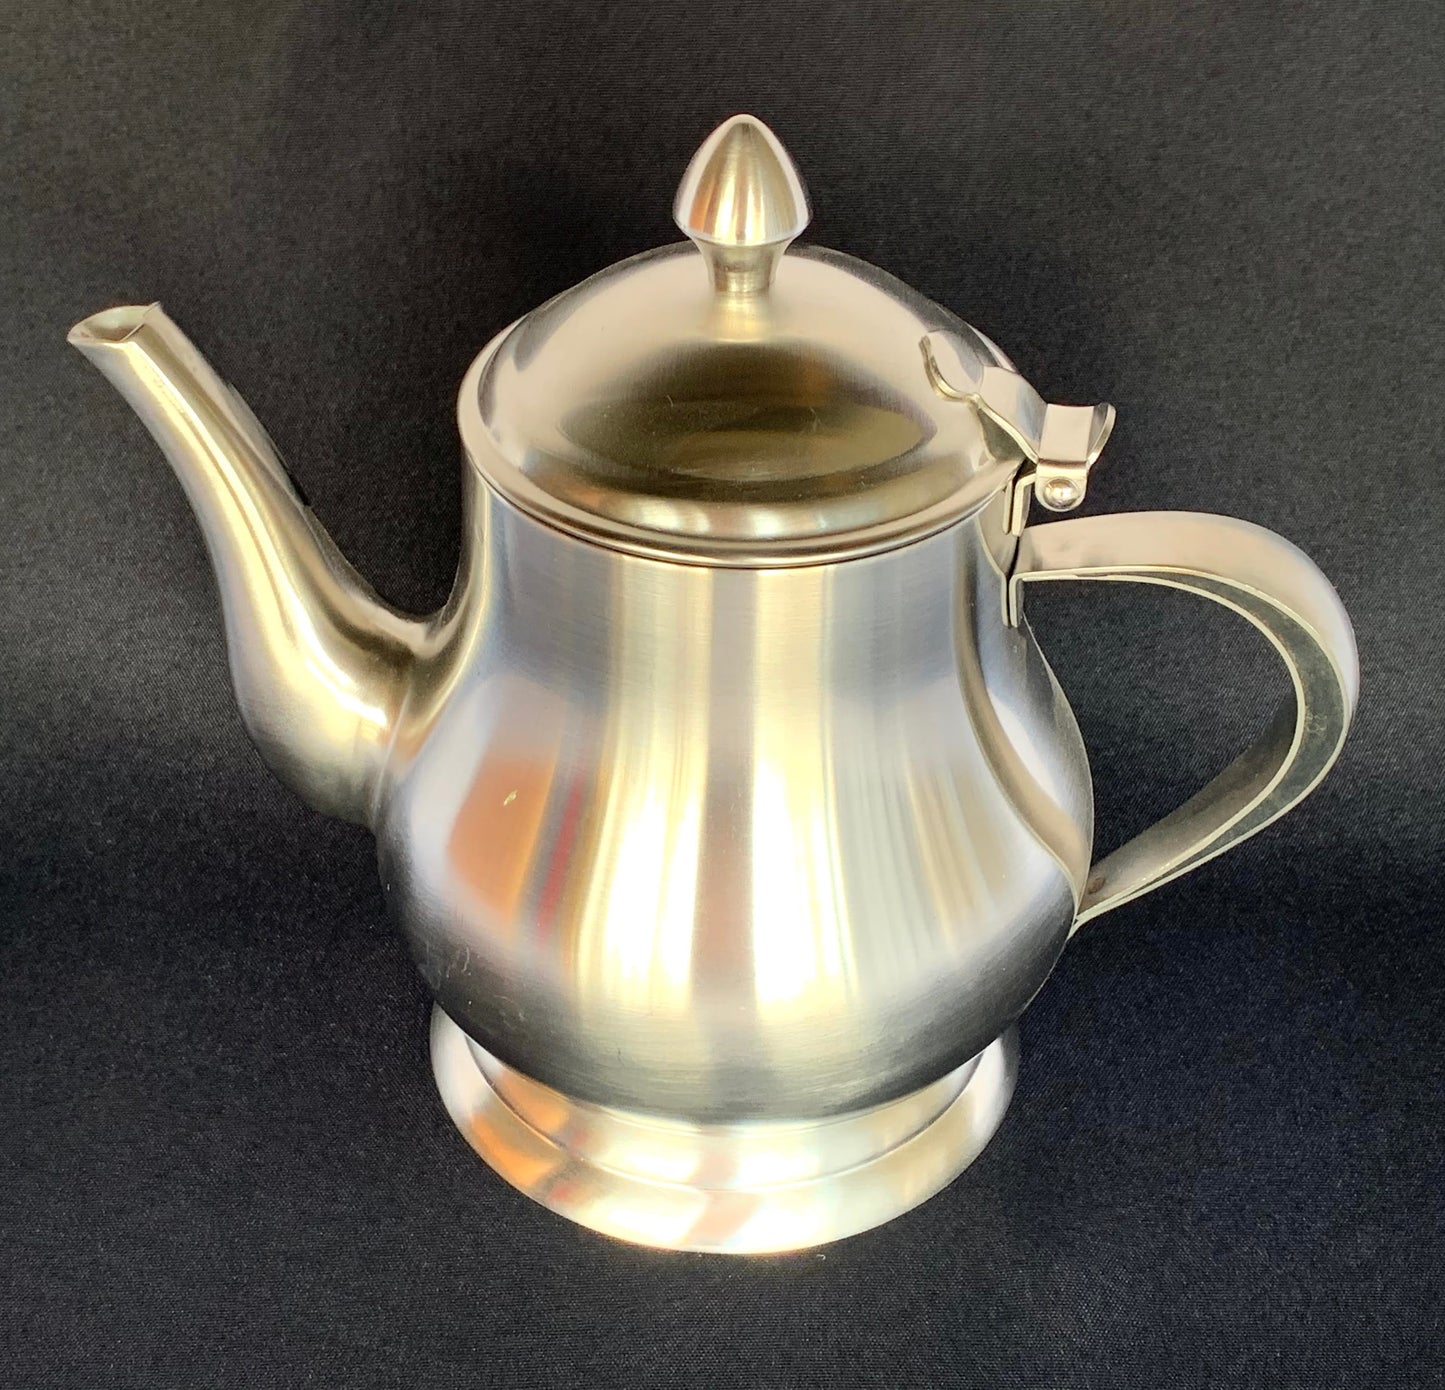 Stainless steel Teapot 35oz